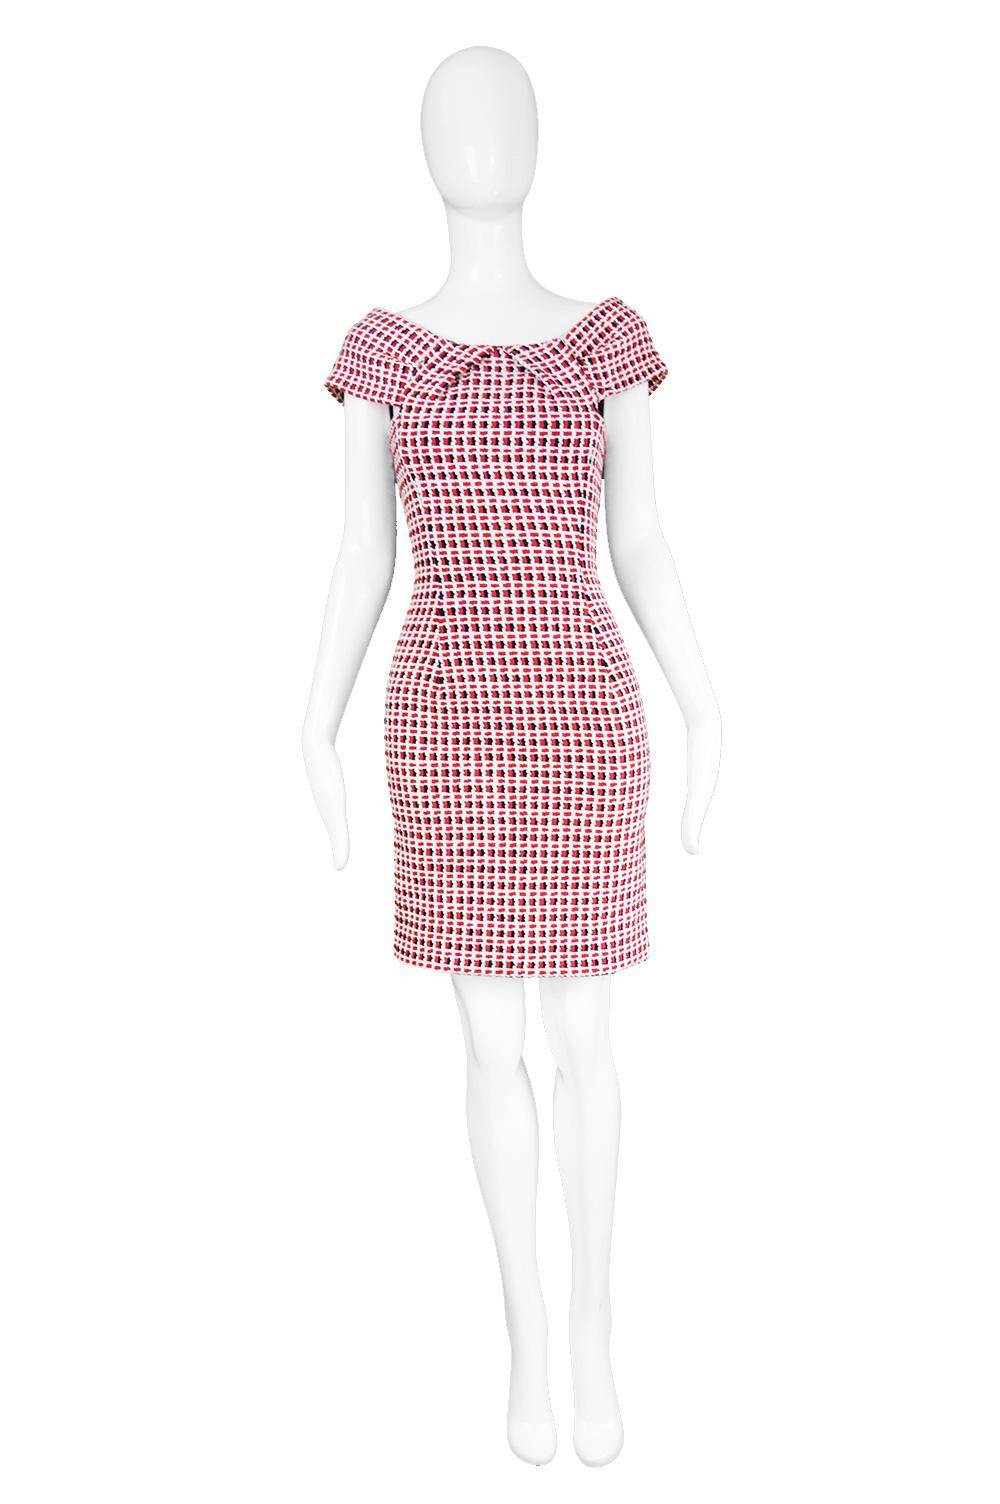 Odicini Couture Woven Red White & Black Ribbon Bardot Party Dress, 1990s

Estimated Size: UK 6/ US 2/ EU 34. Please check measurements.
Bust - 32” / 81cm
Waist - 25” / 63cm
Hips - 34” / 86cm
Length (Bust to Hem) - 27” / 68cm

Condition: Excellent